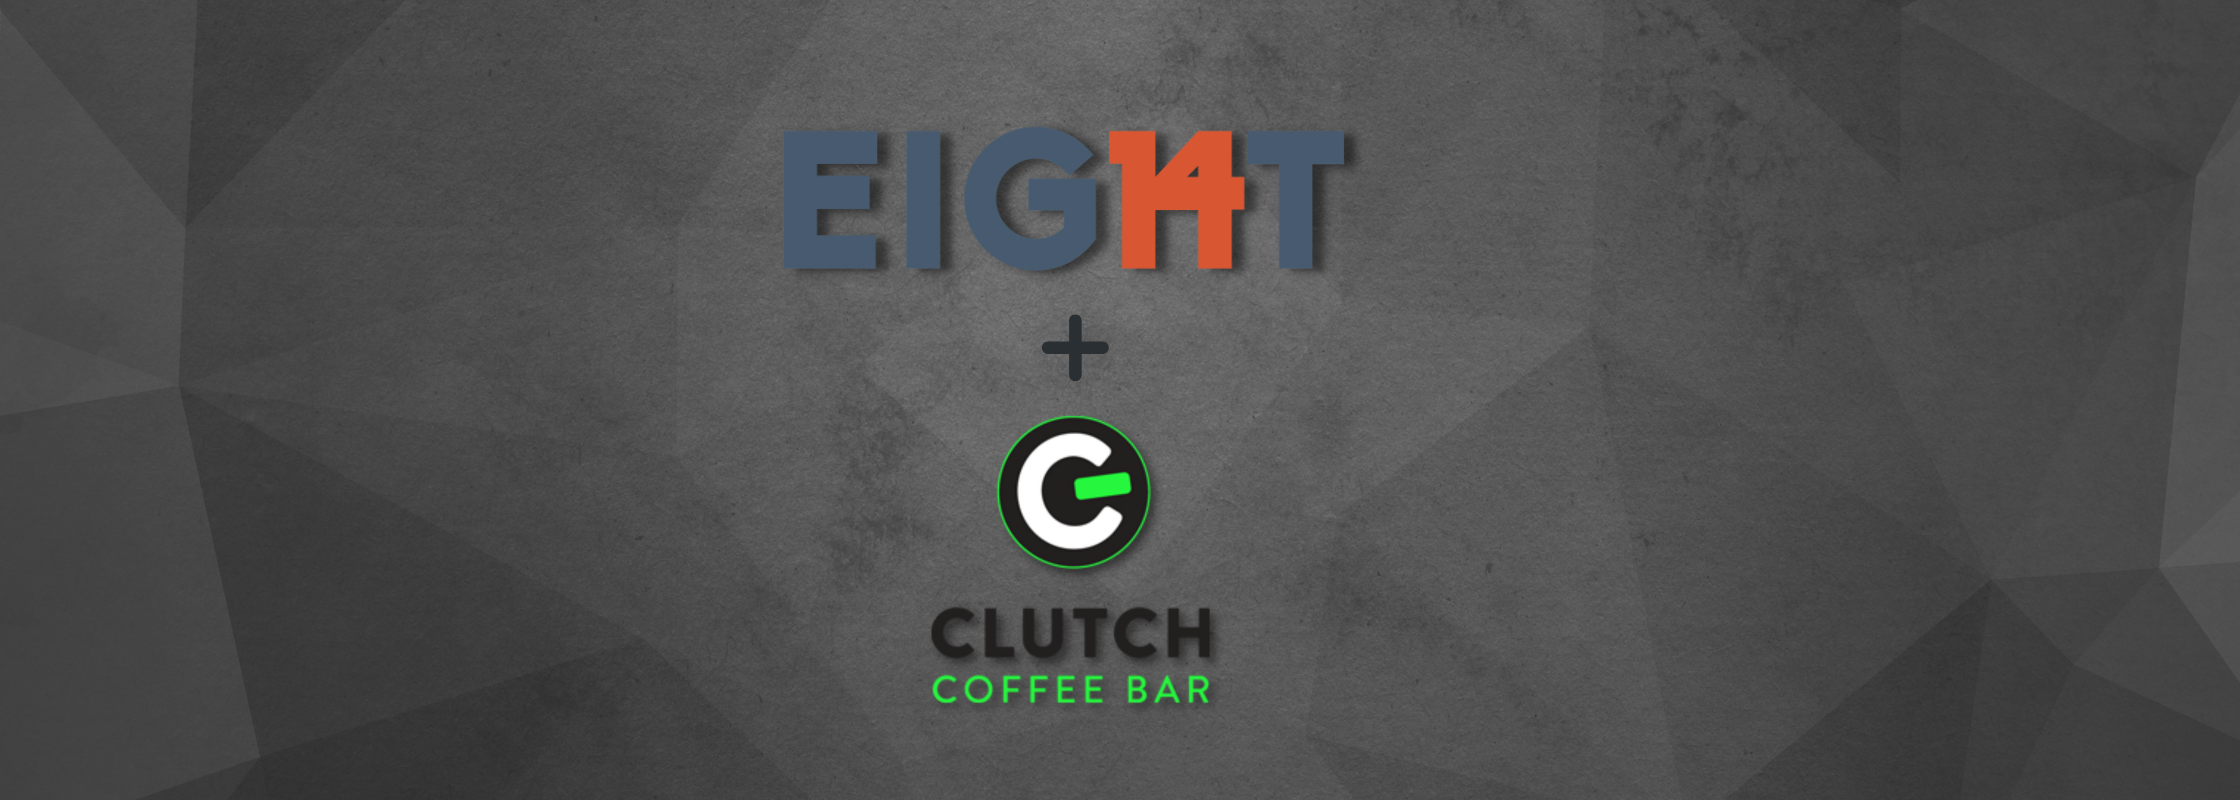 EIG14T and Clutch Coffee Bar Announce Partnership